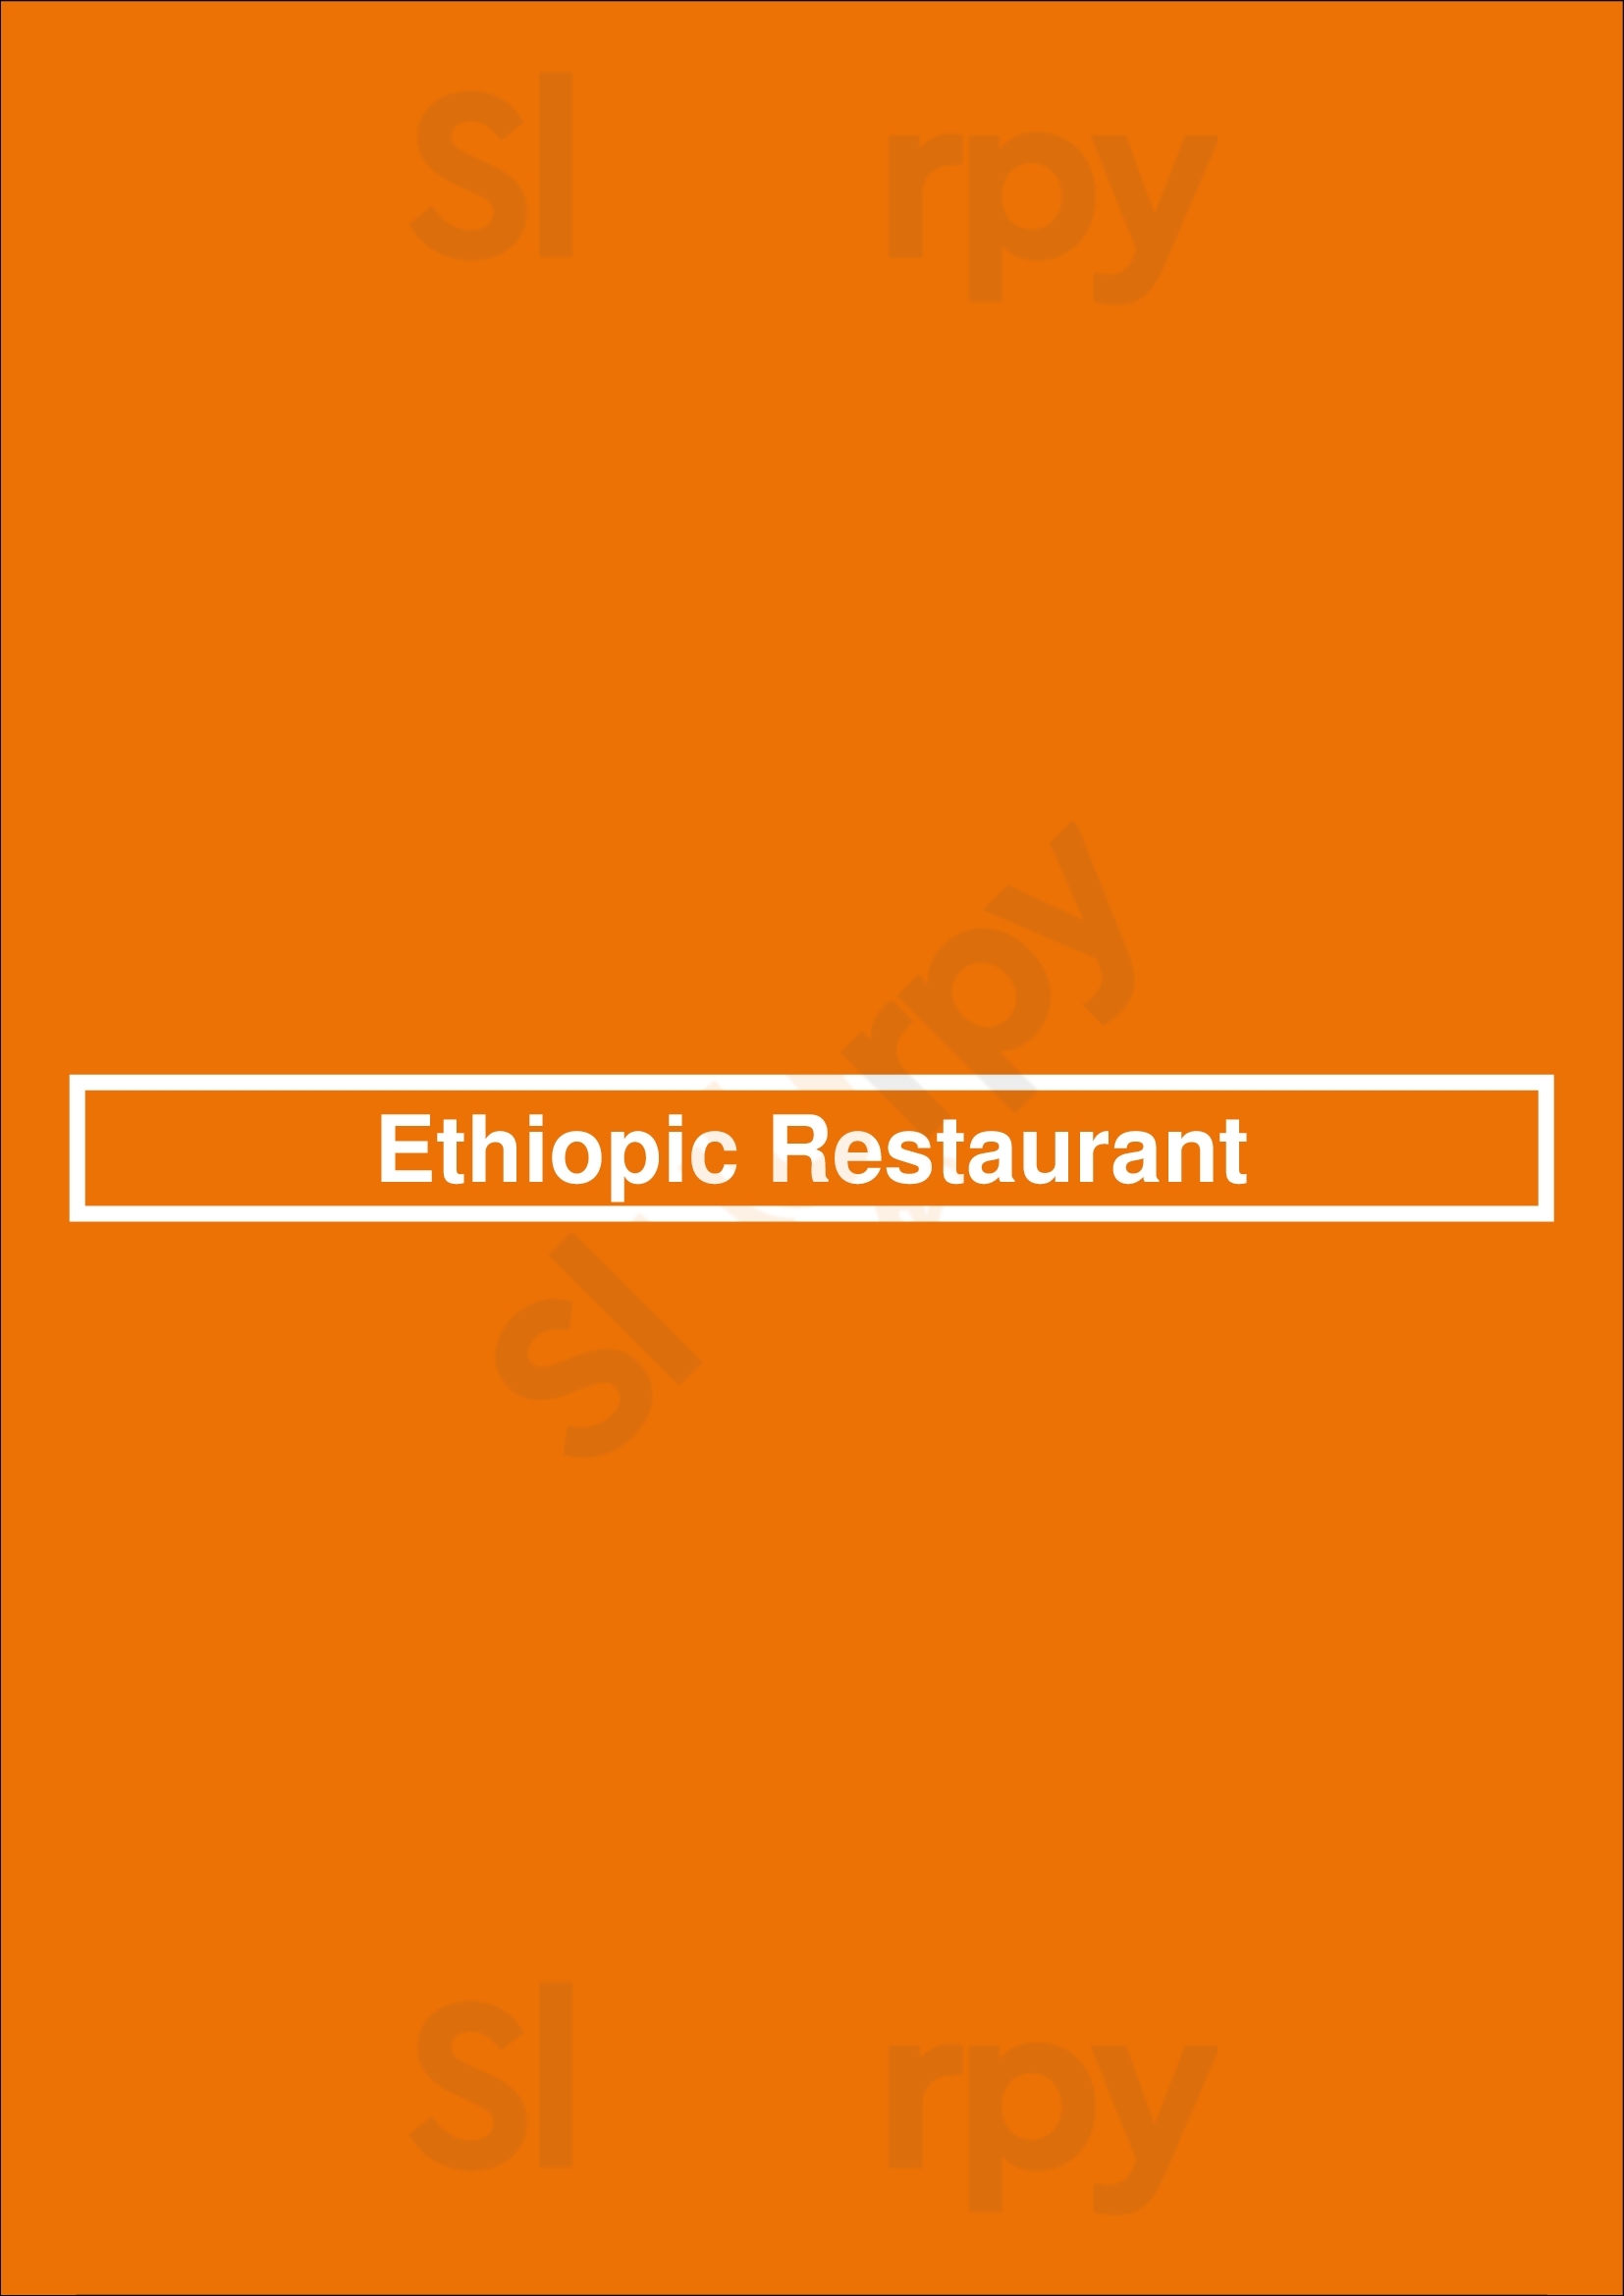 Ethiopic Restaurant Washington DC Menu - 1